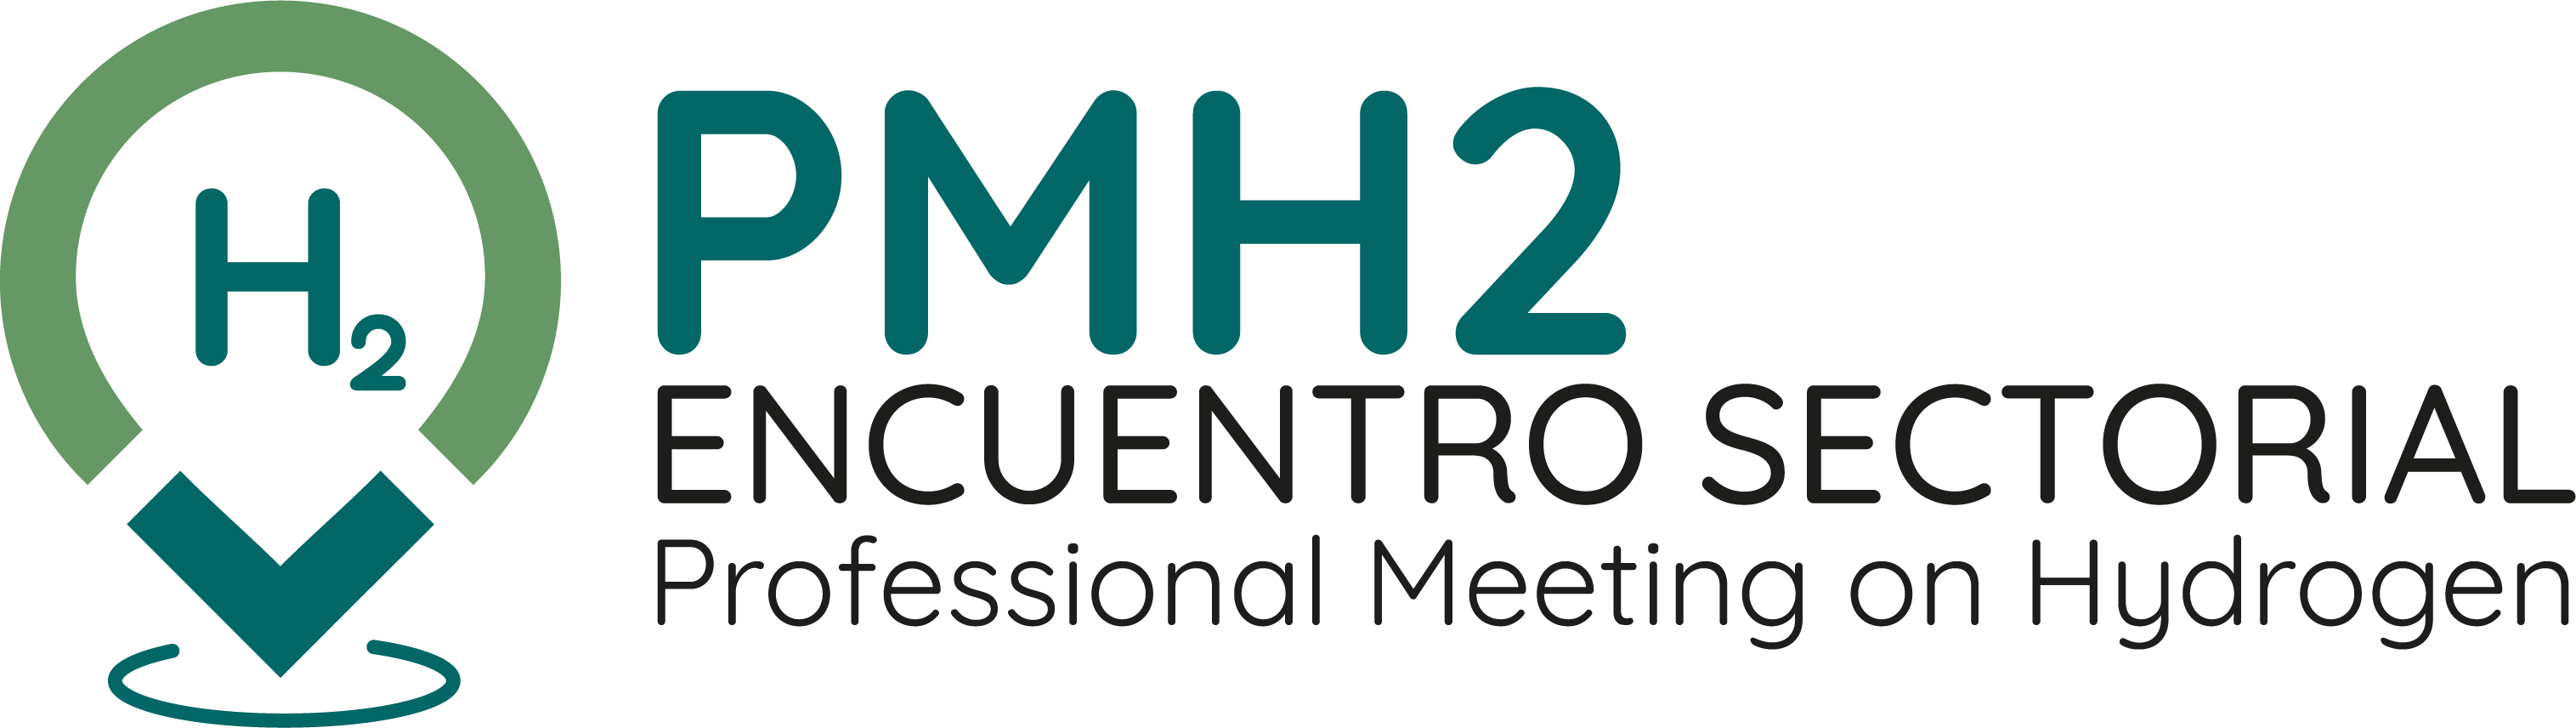 IV Encuentro Sectorial del Hidrógeno (PMH2)